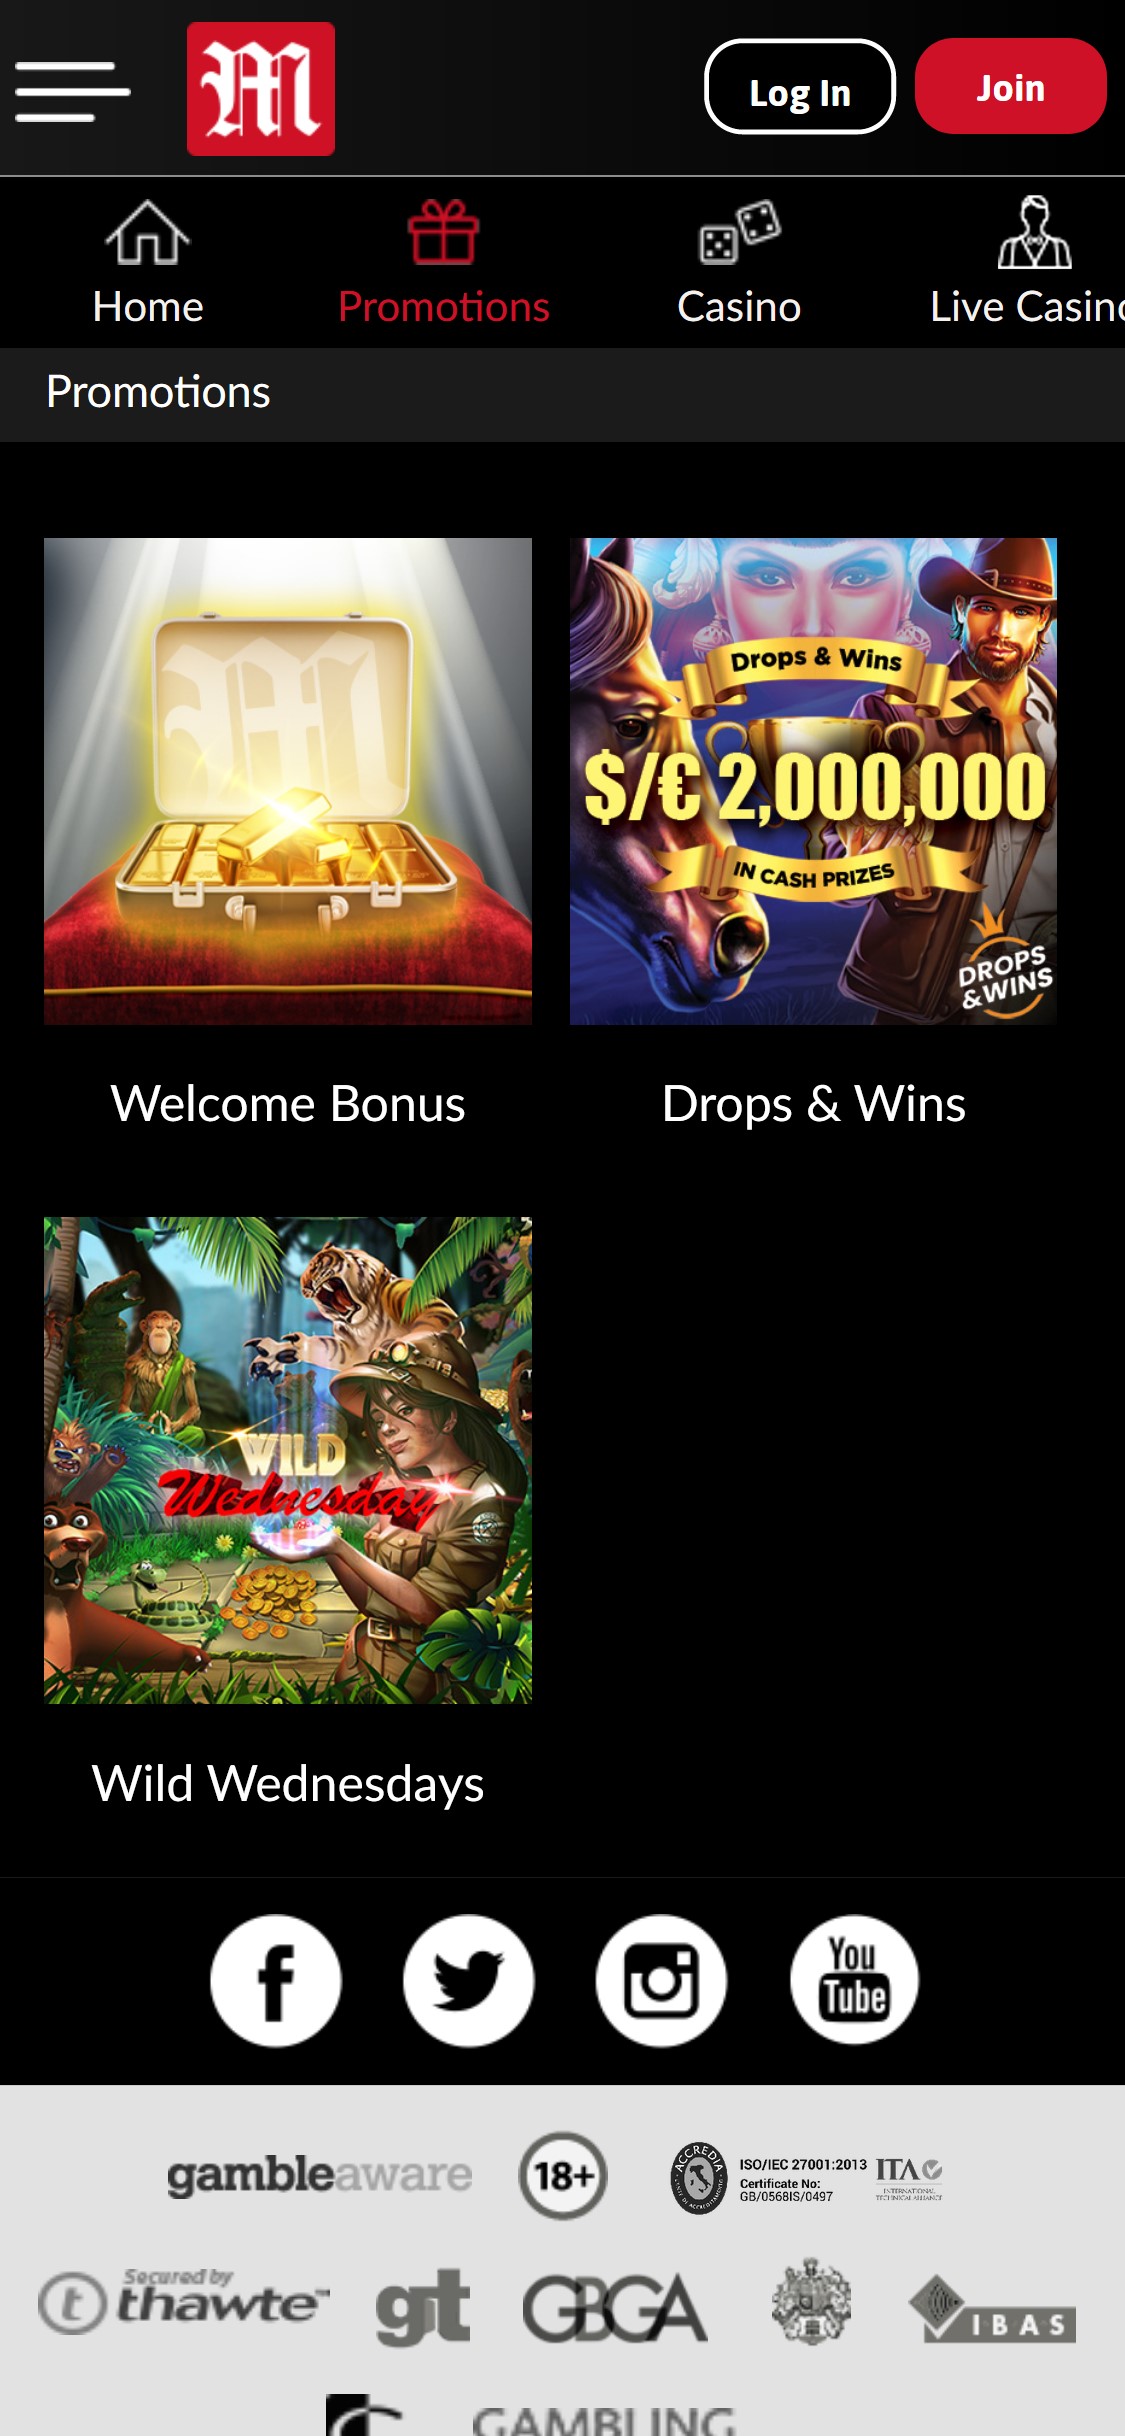 Mansion Casino Mobile No Deposit Bonus Review